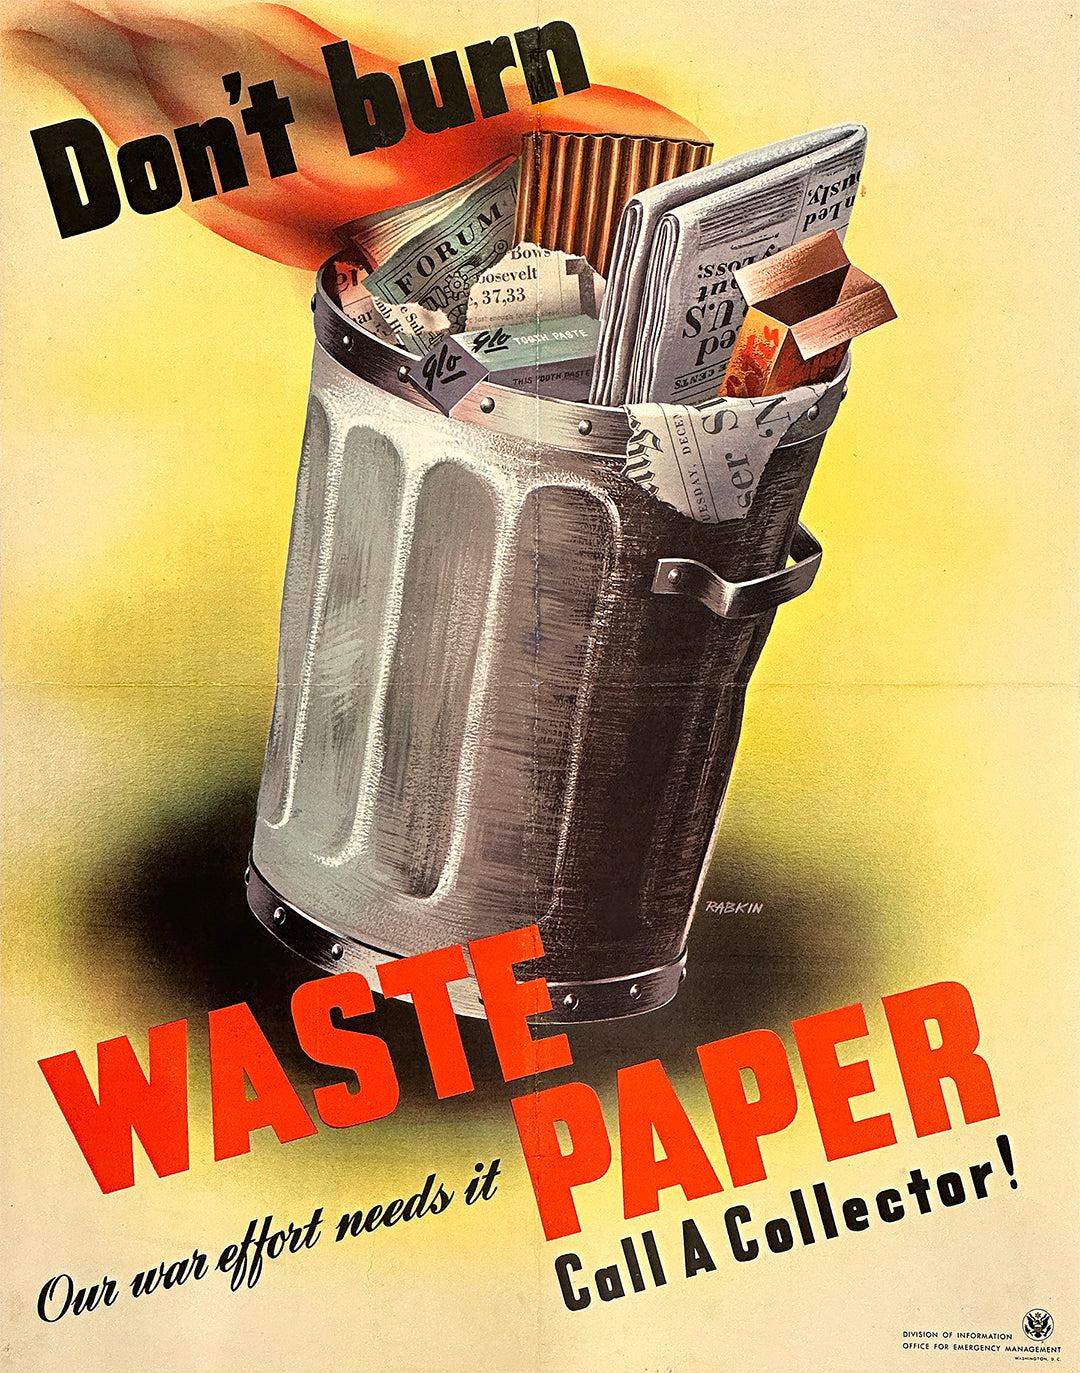 Original Vintage WWII Poster Don't Burn Waste Paper by Rabkin c1943